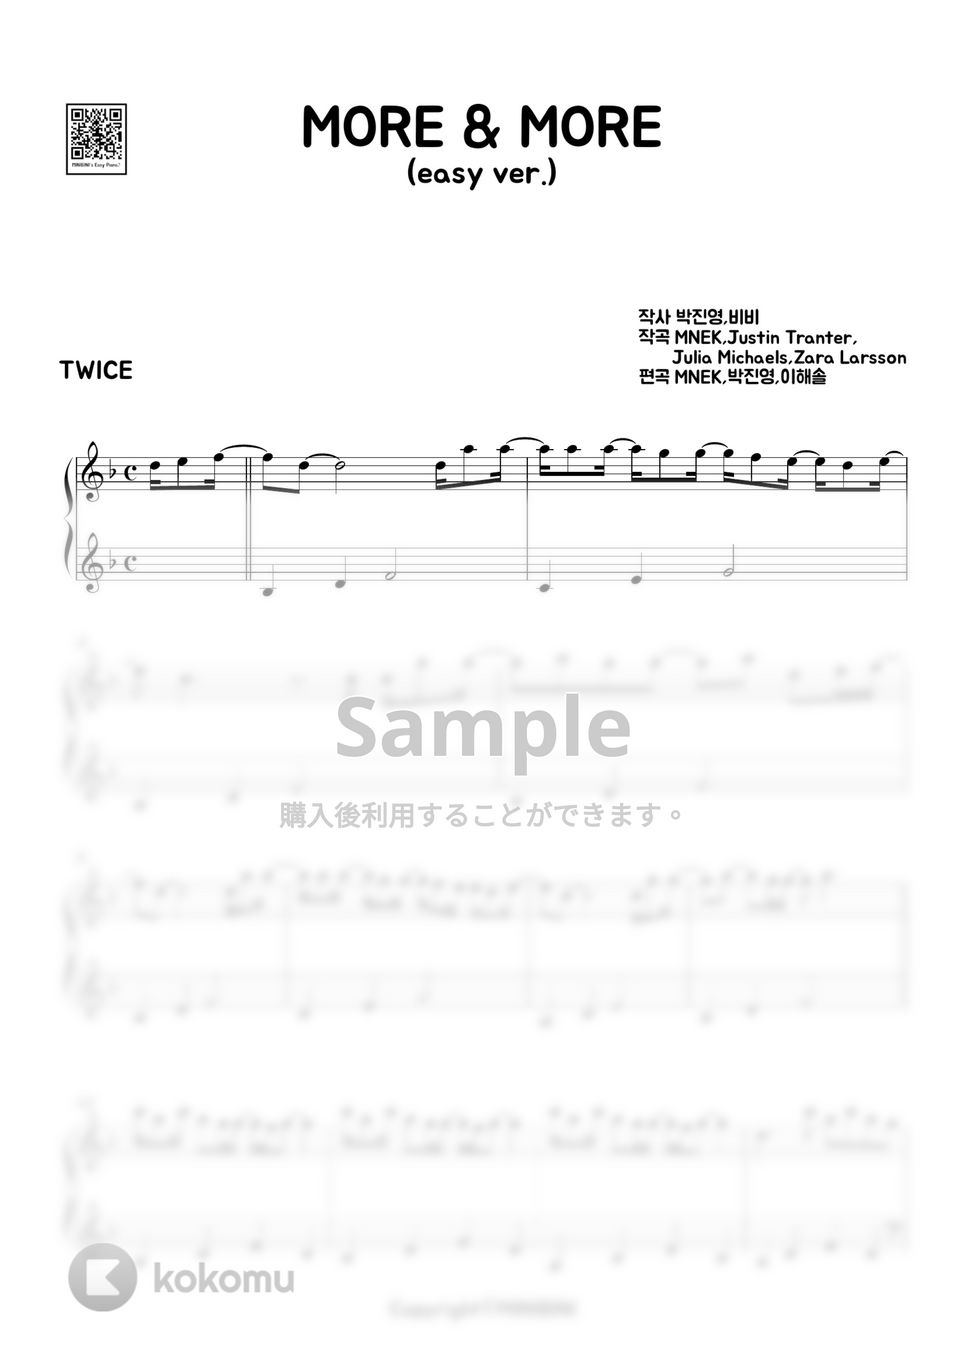 TWICE - MORE&MORE (Easy Ver.) by MINIBINI